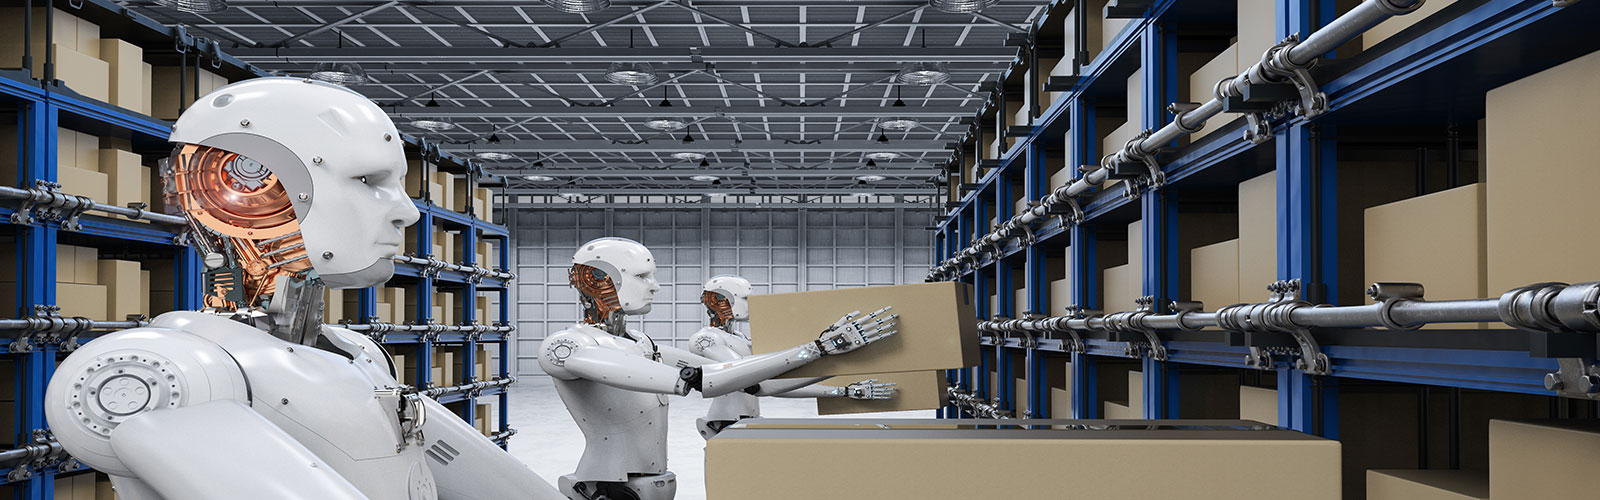 supply-chain-robots